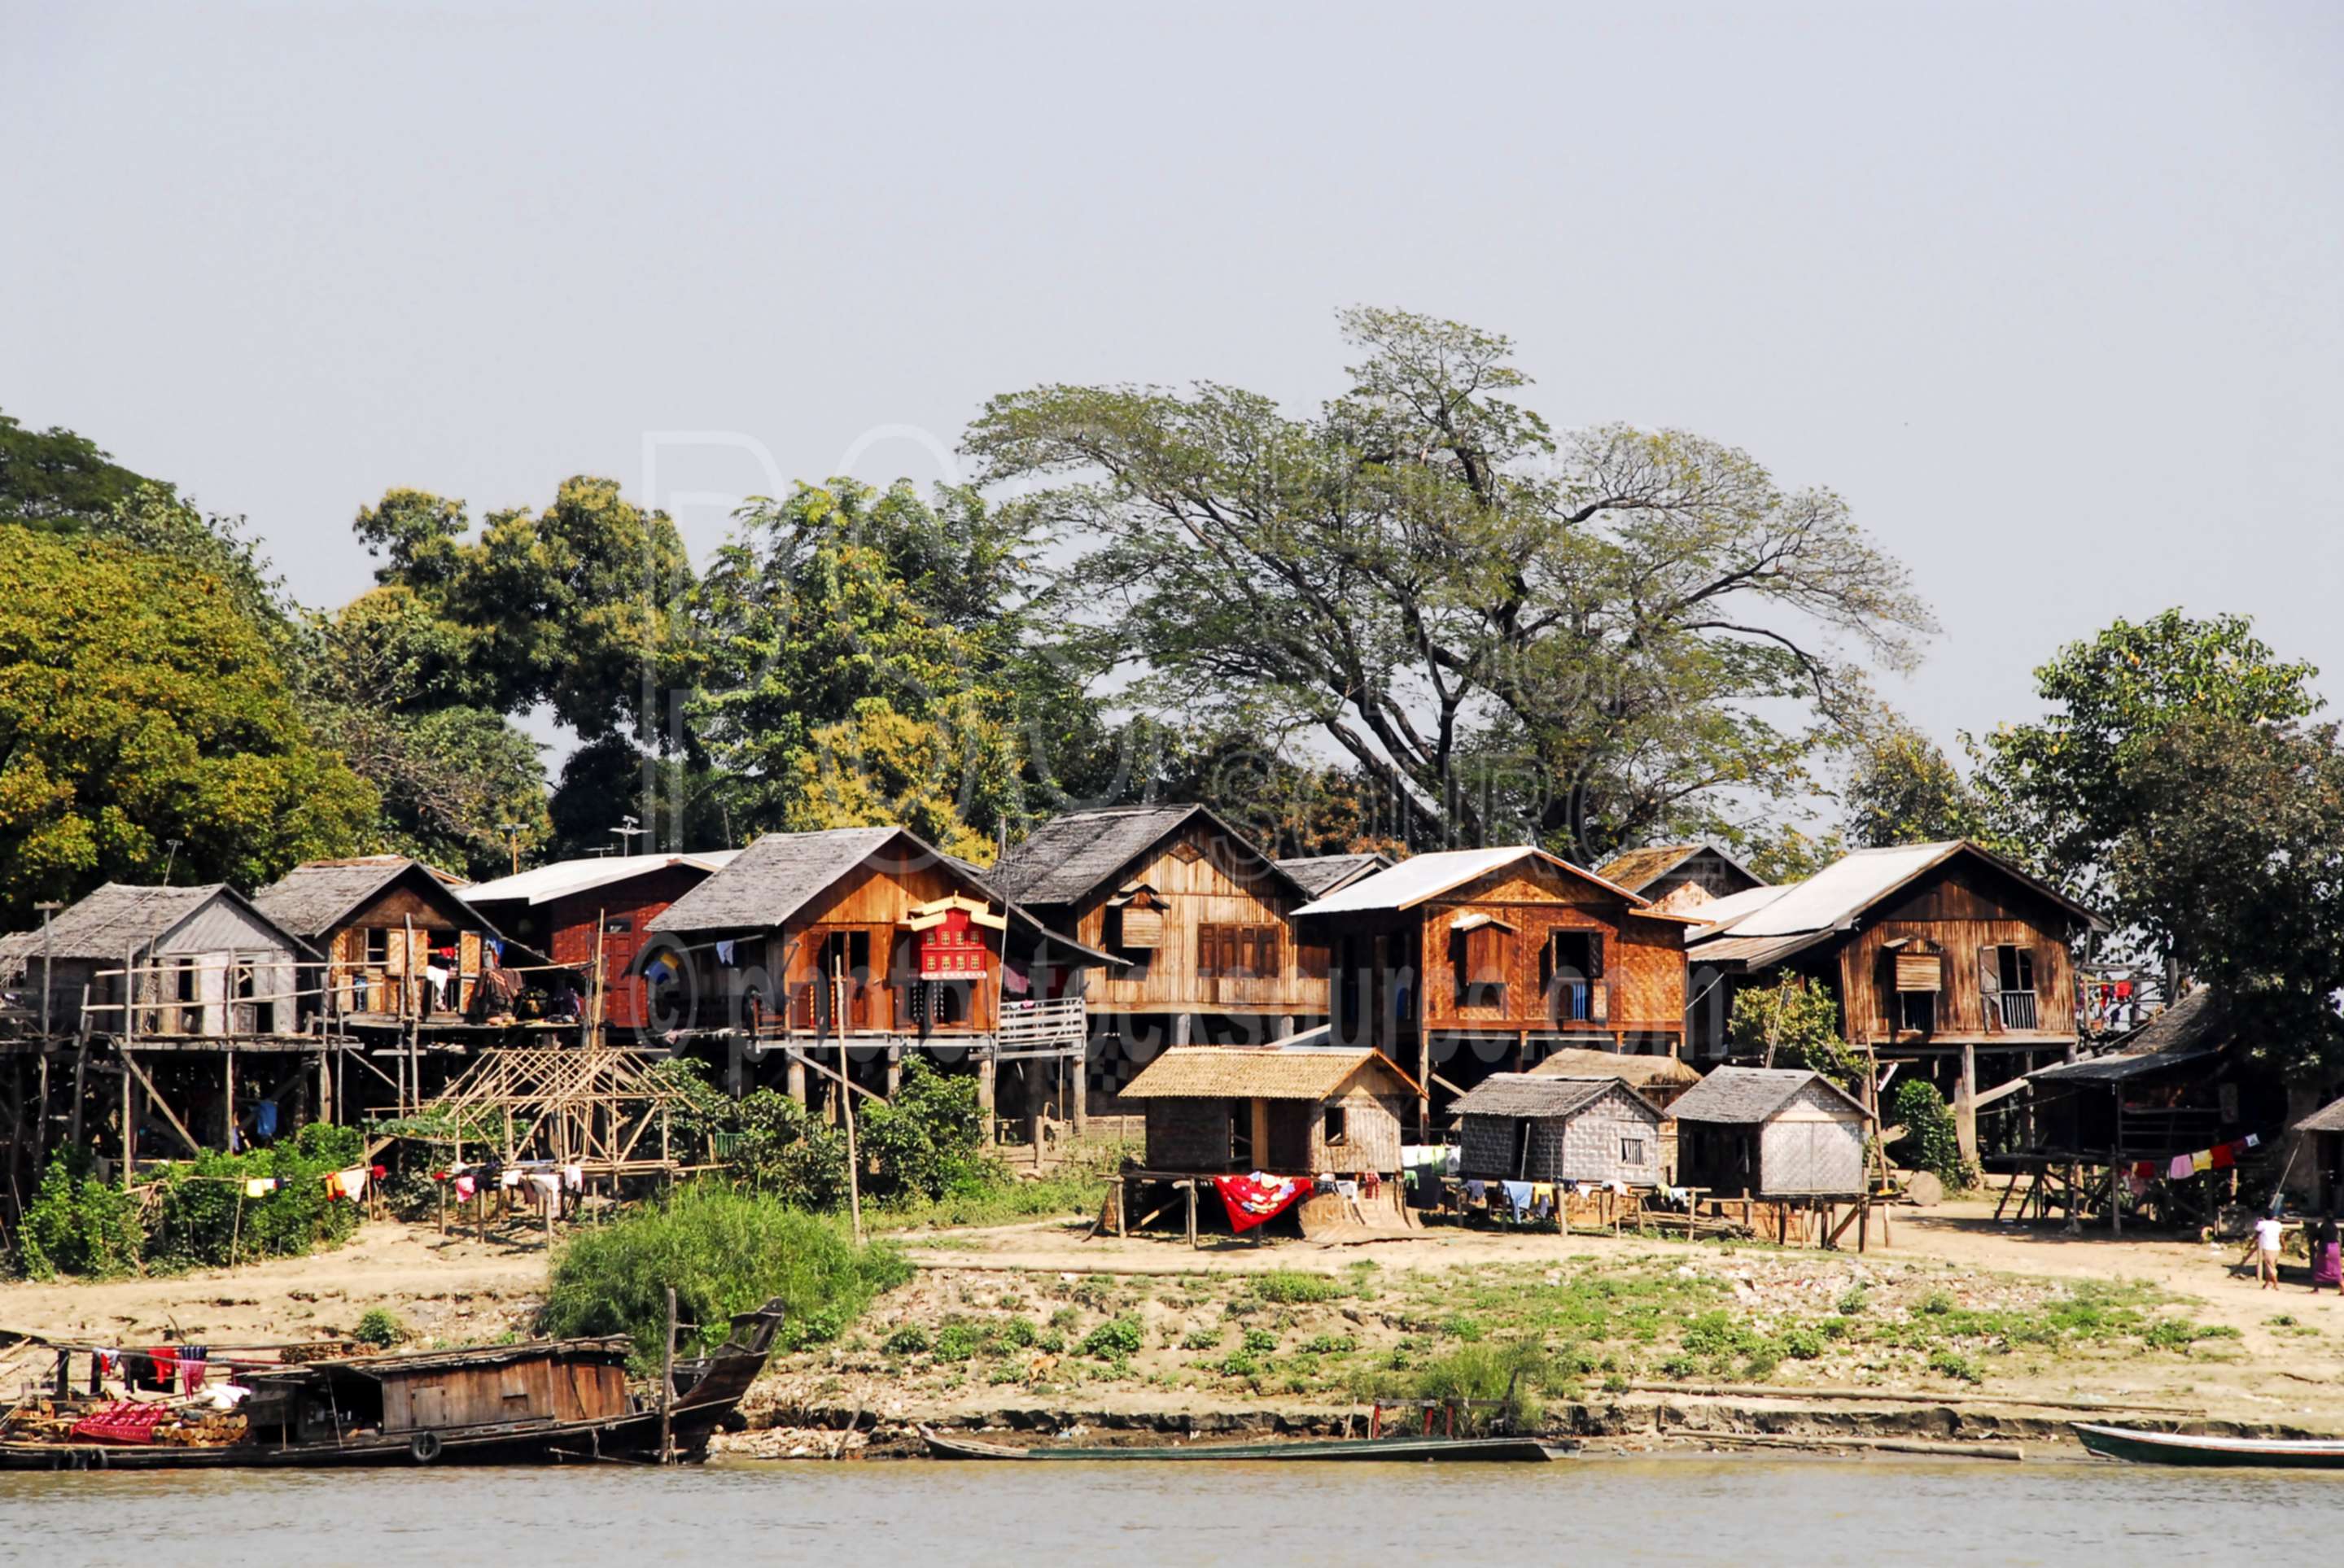 Irawaddy Village,myanmar,construction,house,boat,river,irrawaddy,ayeyarwaddy